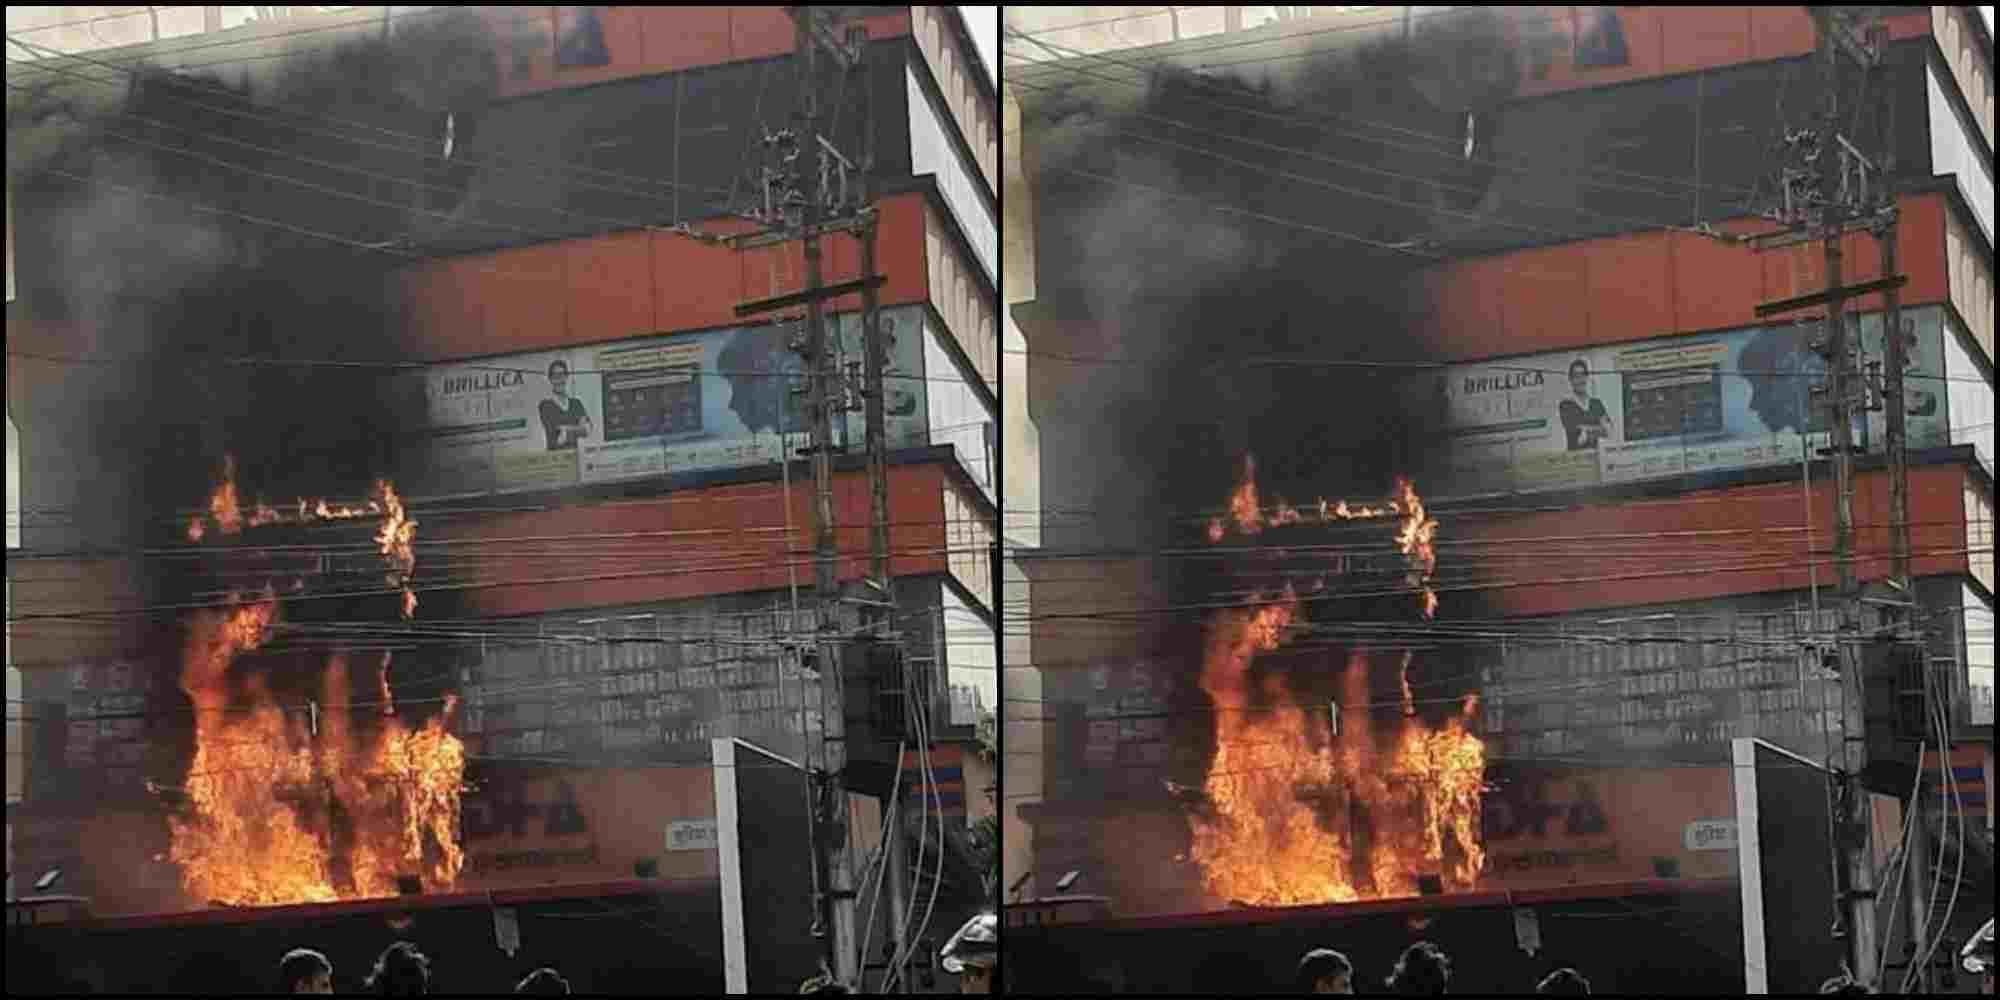 dehradun patel nagar fire: Fire at SUVIDHA Center in Patelnagar  Dehradun